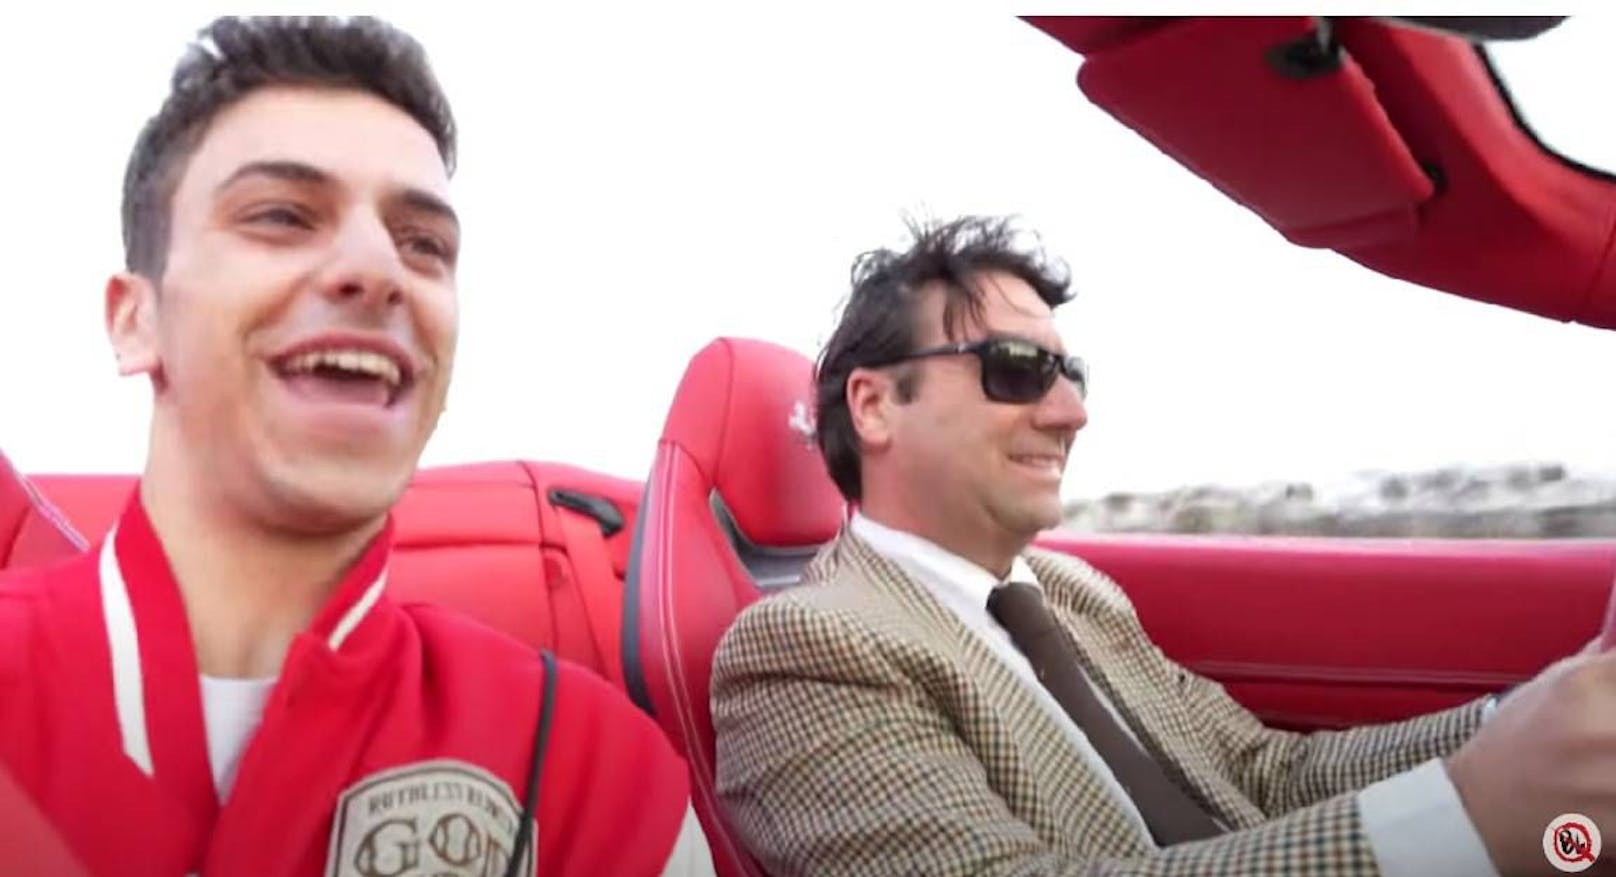 Mag schnelle Autos: Youtuber Matteo Di Pietro steuerte den Lamborghini, der Manuel (5) tot raste. Hier ist Di Pietro mit seinem Vater im Ferrari unterwegs.